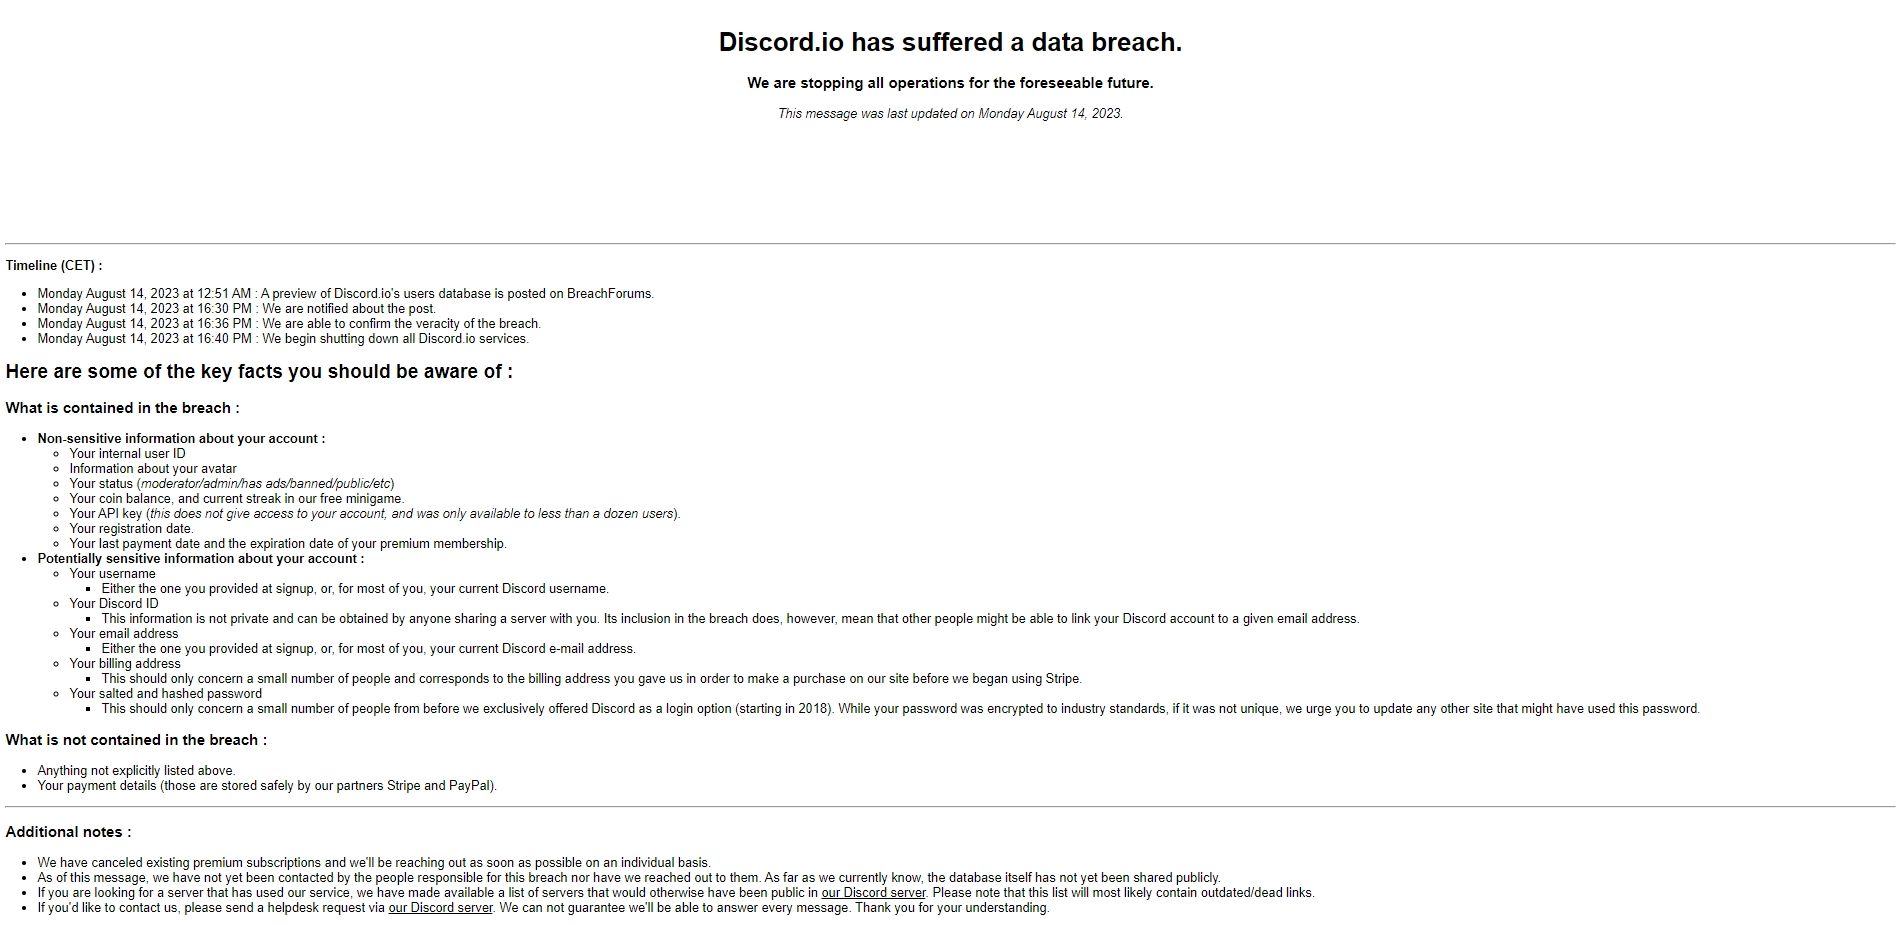 Discord.io Data Breach Concerns 760k Users Dataconomy